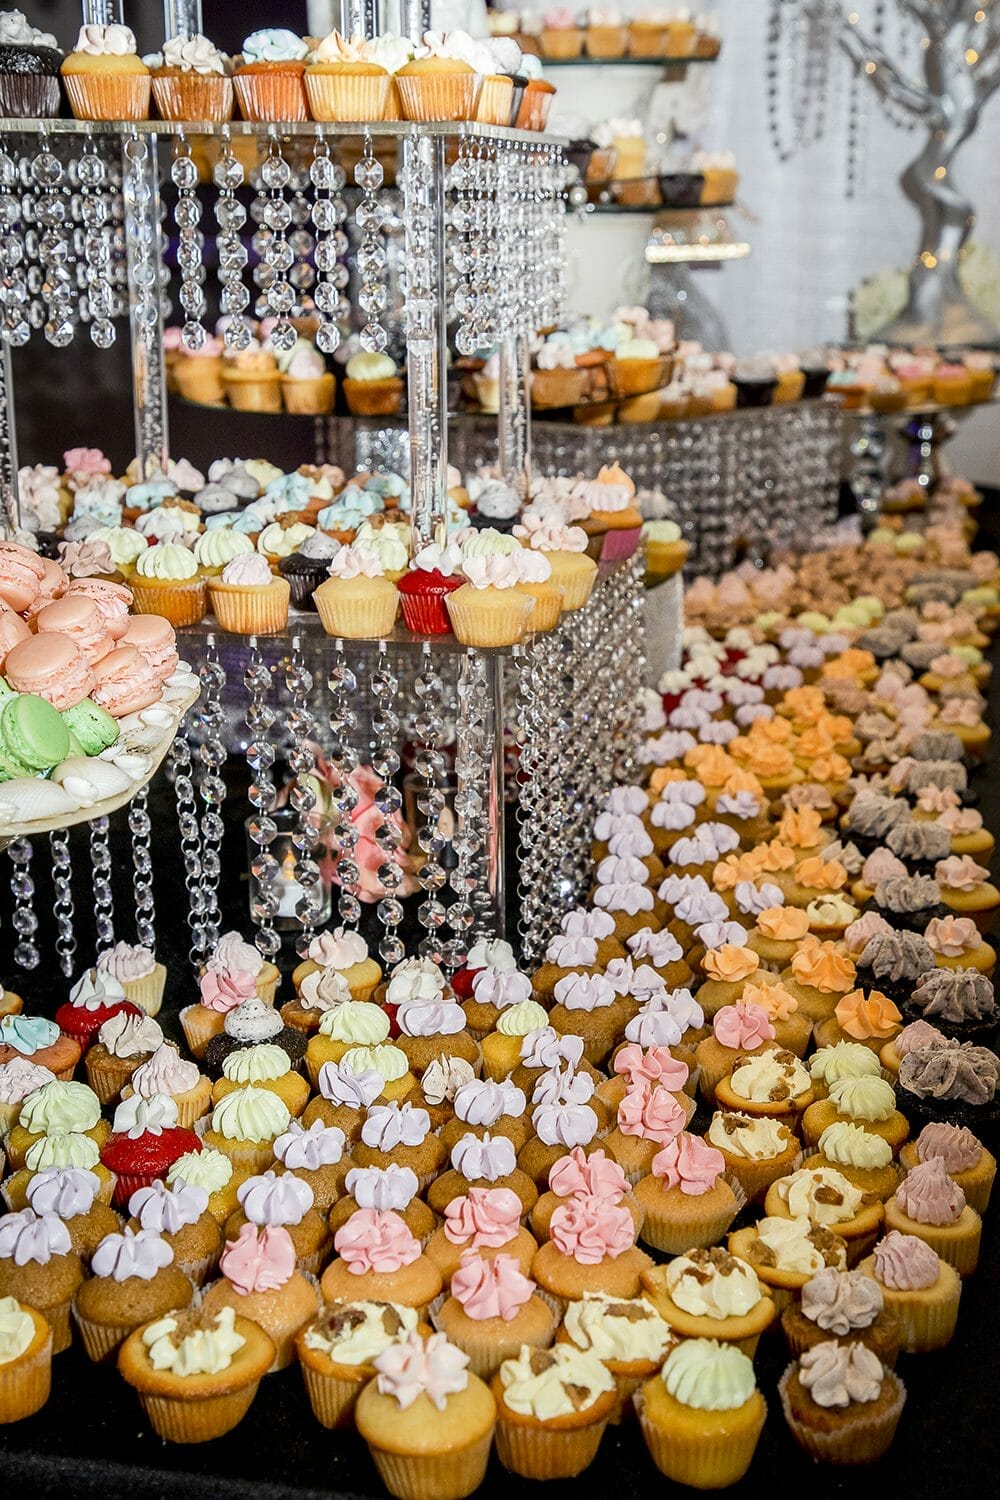 Macaroon and cupcake display